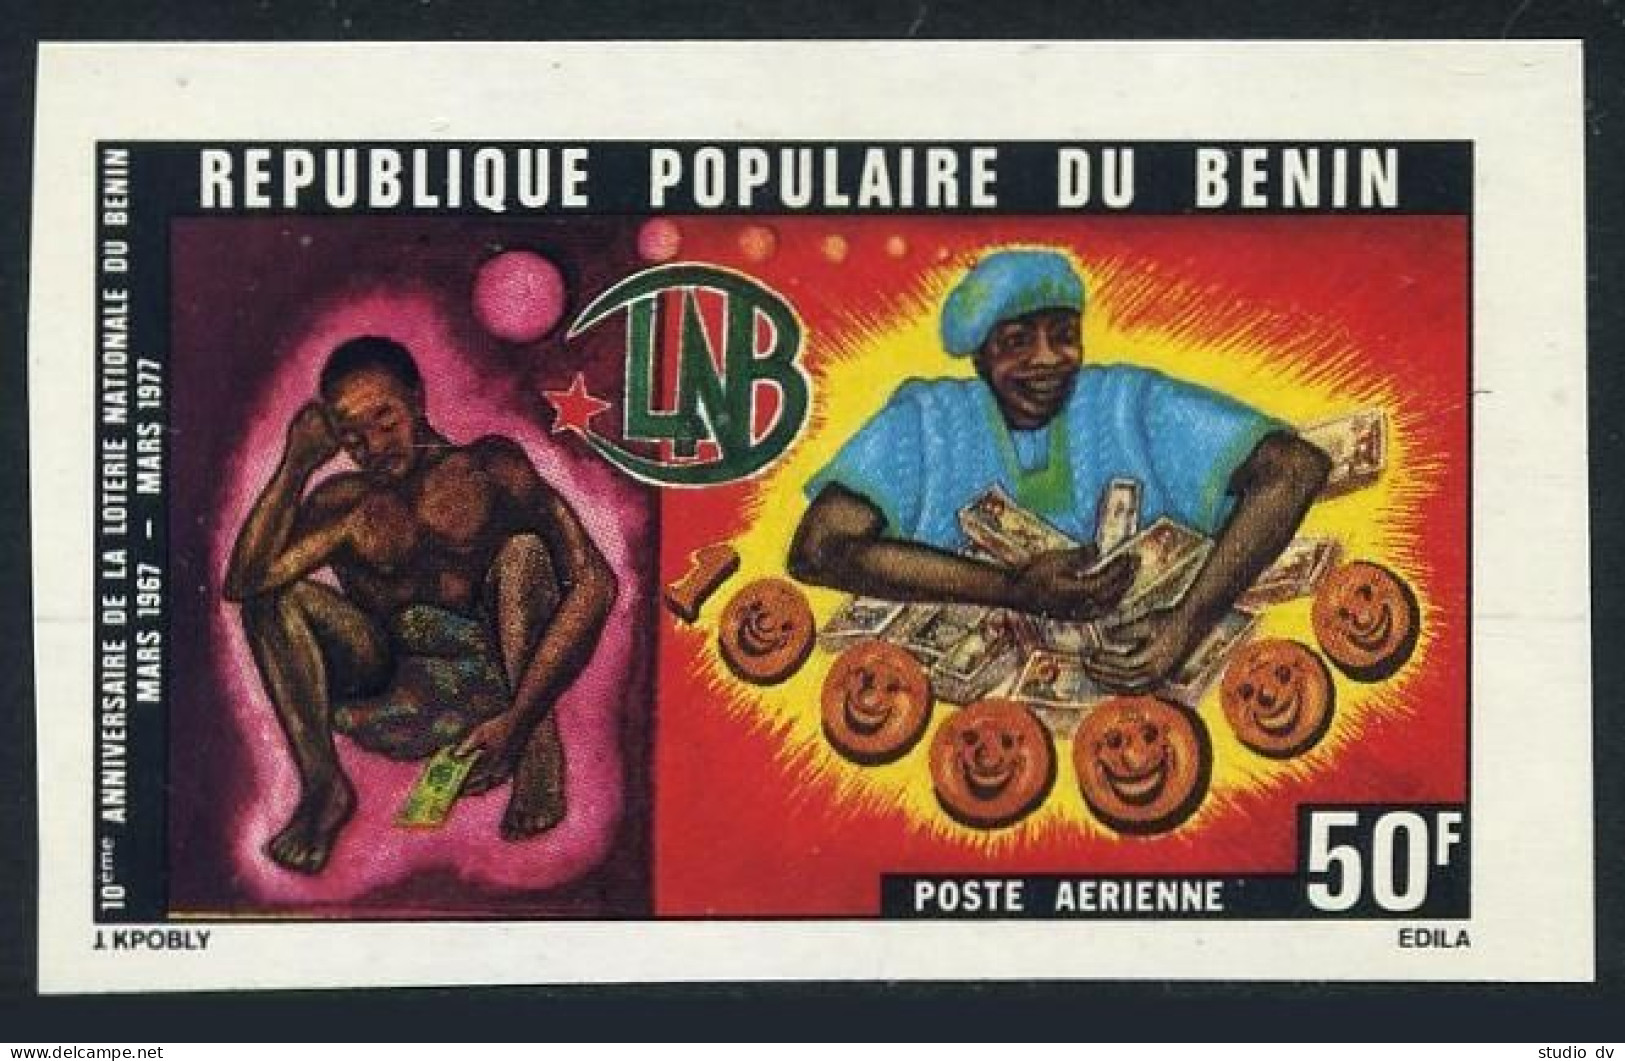 Benin C263 Imperf,MNH.Michel 86B. National Lottery,10th Ann.1977. - Benin - Dahomey (1960-...)